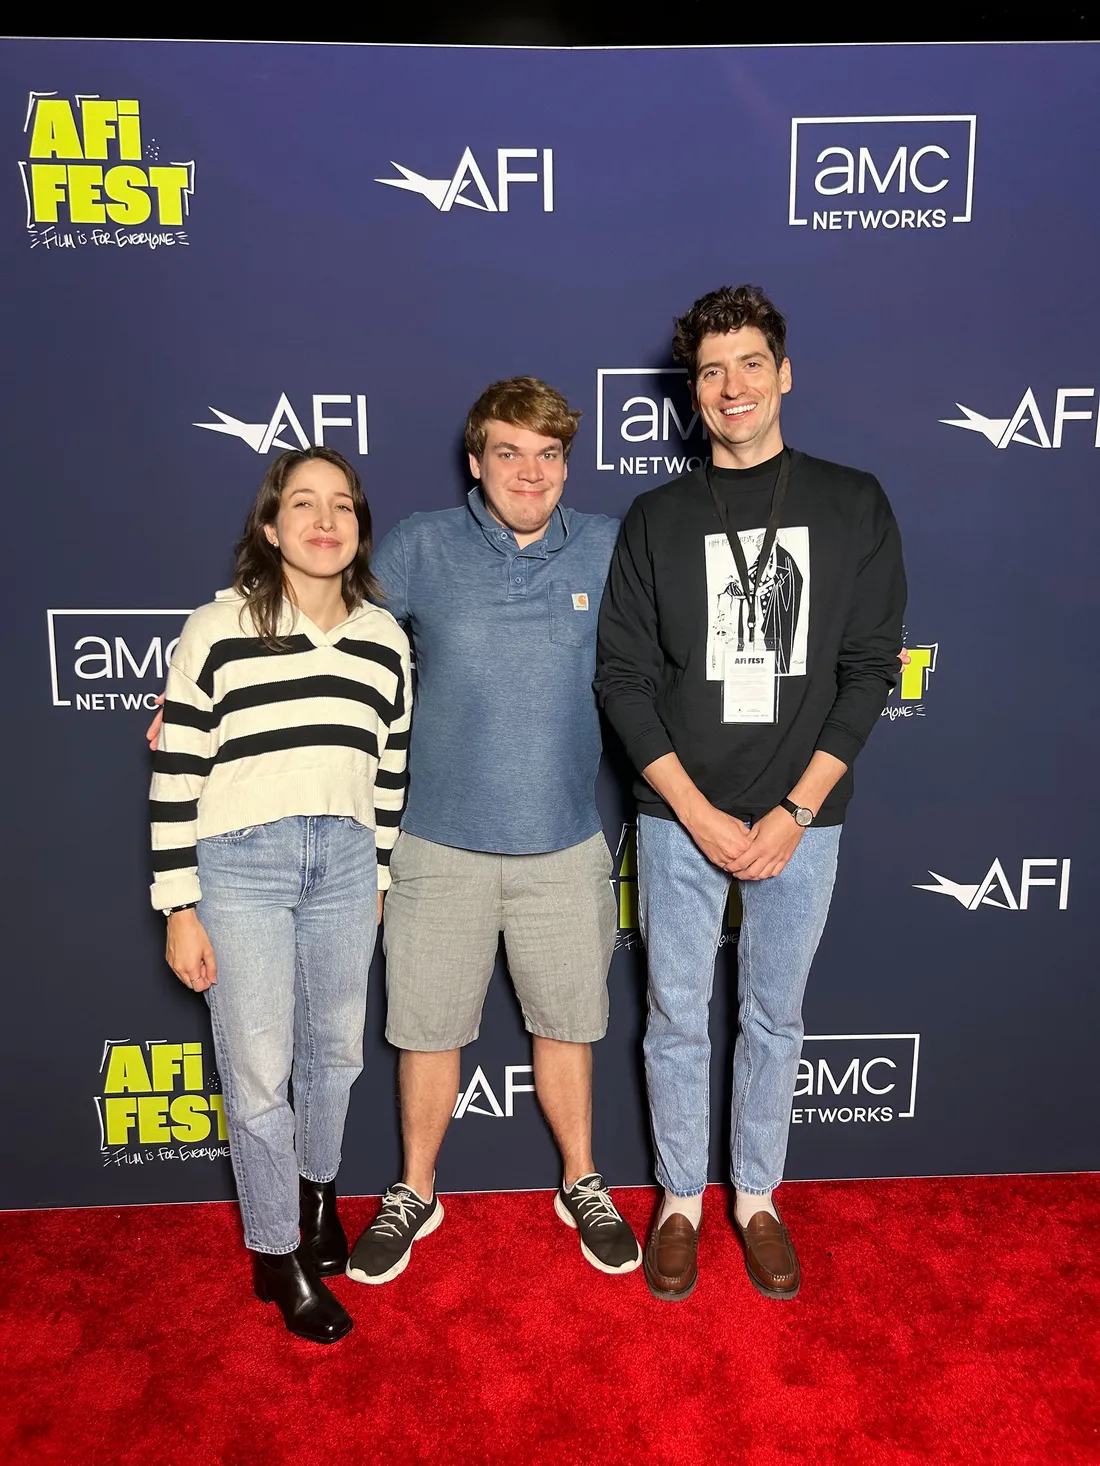 Sam Clark at the AFI Fest, organized by the American Film Institute, where he met film directors Alejandra Vasquez and Sam Osborn.